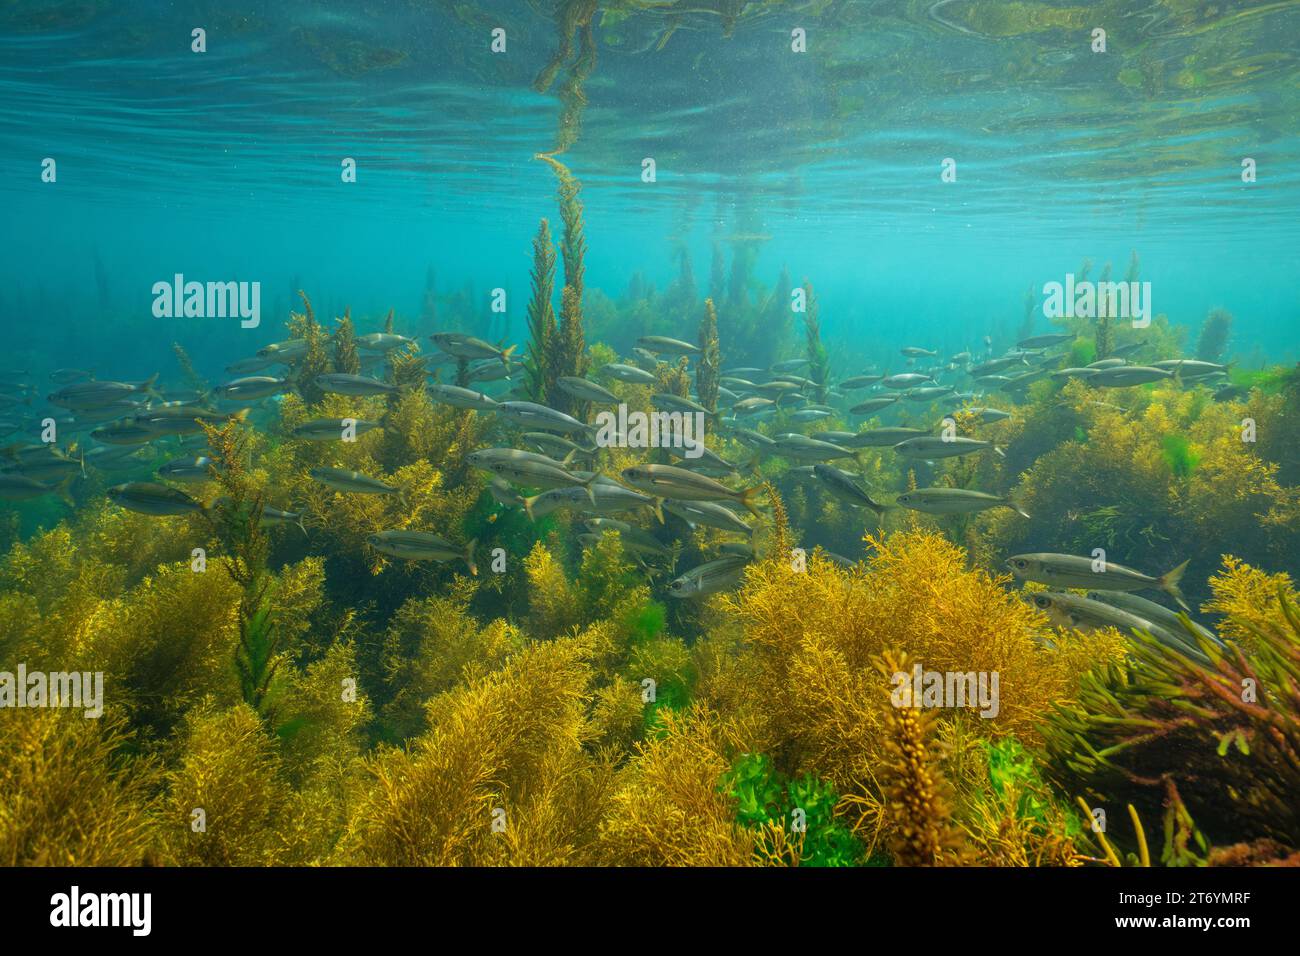 School of fish (bogue) with seaweed in the Atlantic ocean, natural underwater seascape, Spain, Galicia, Rias Baixas Stock Photo